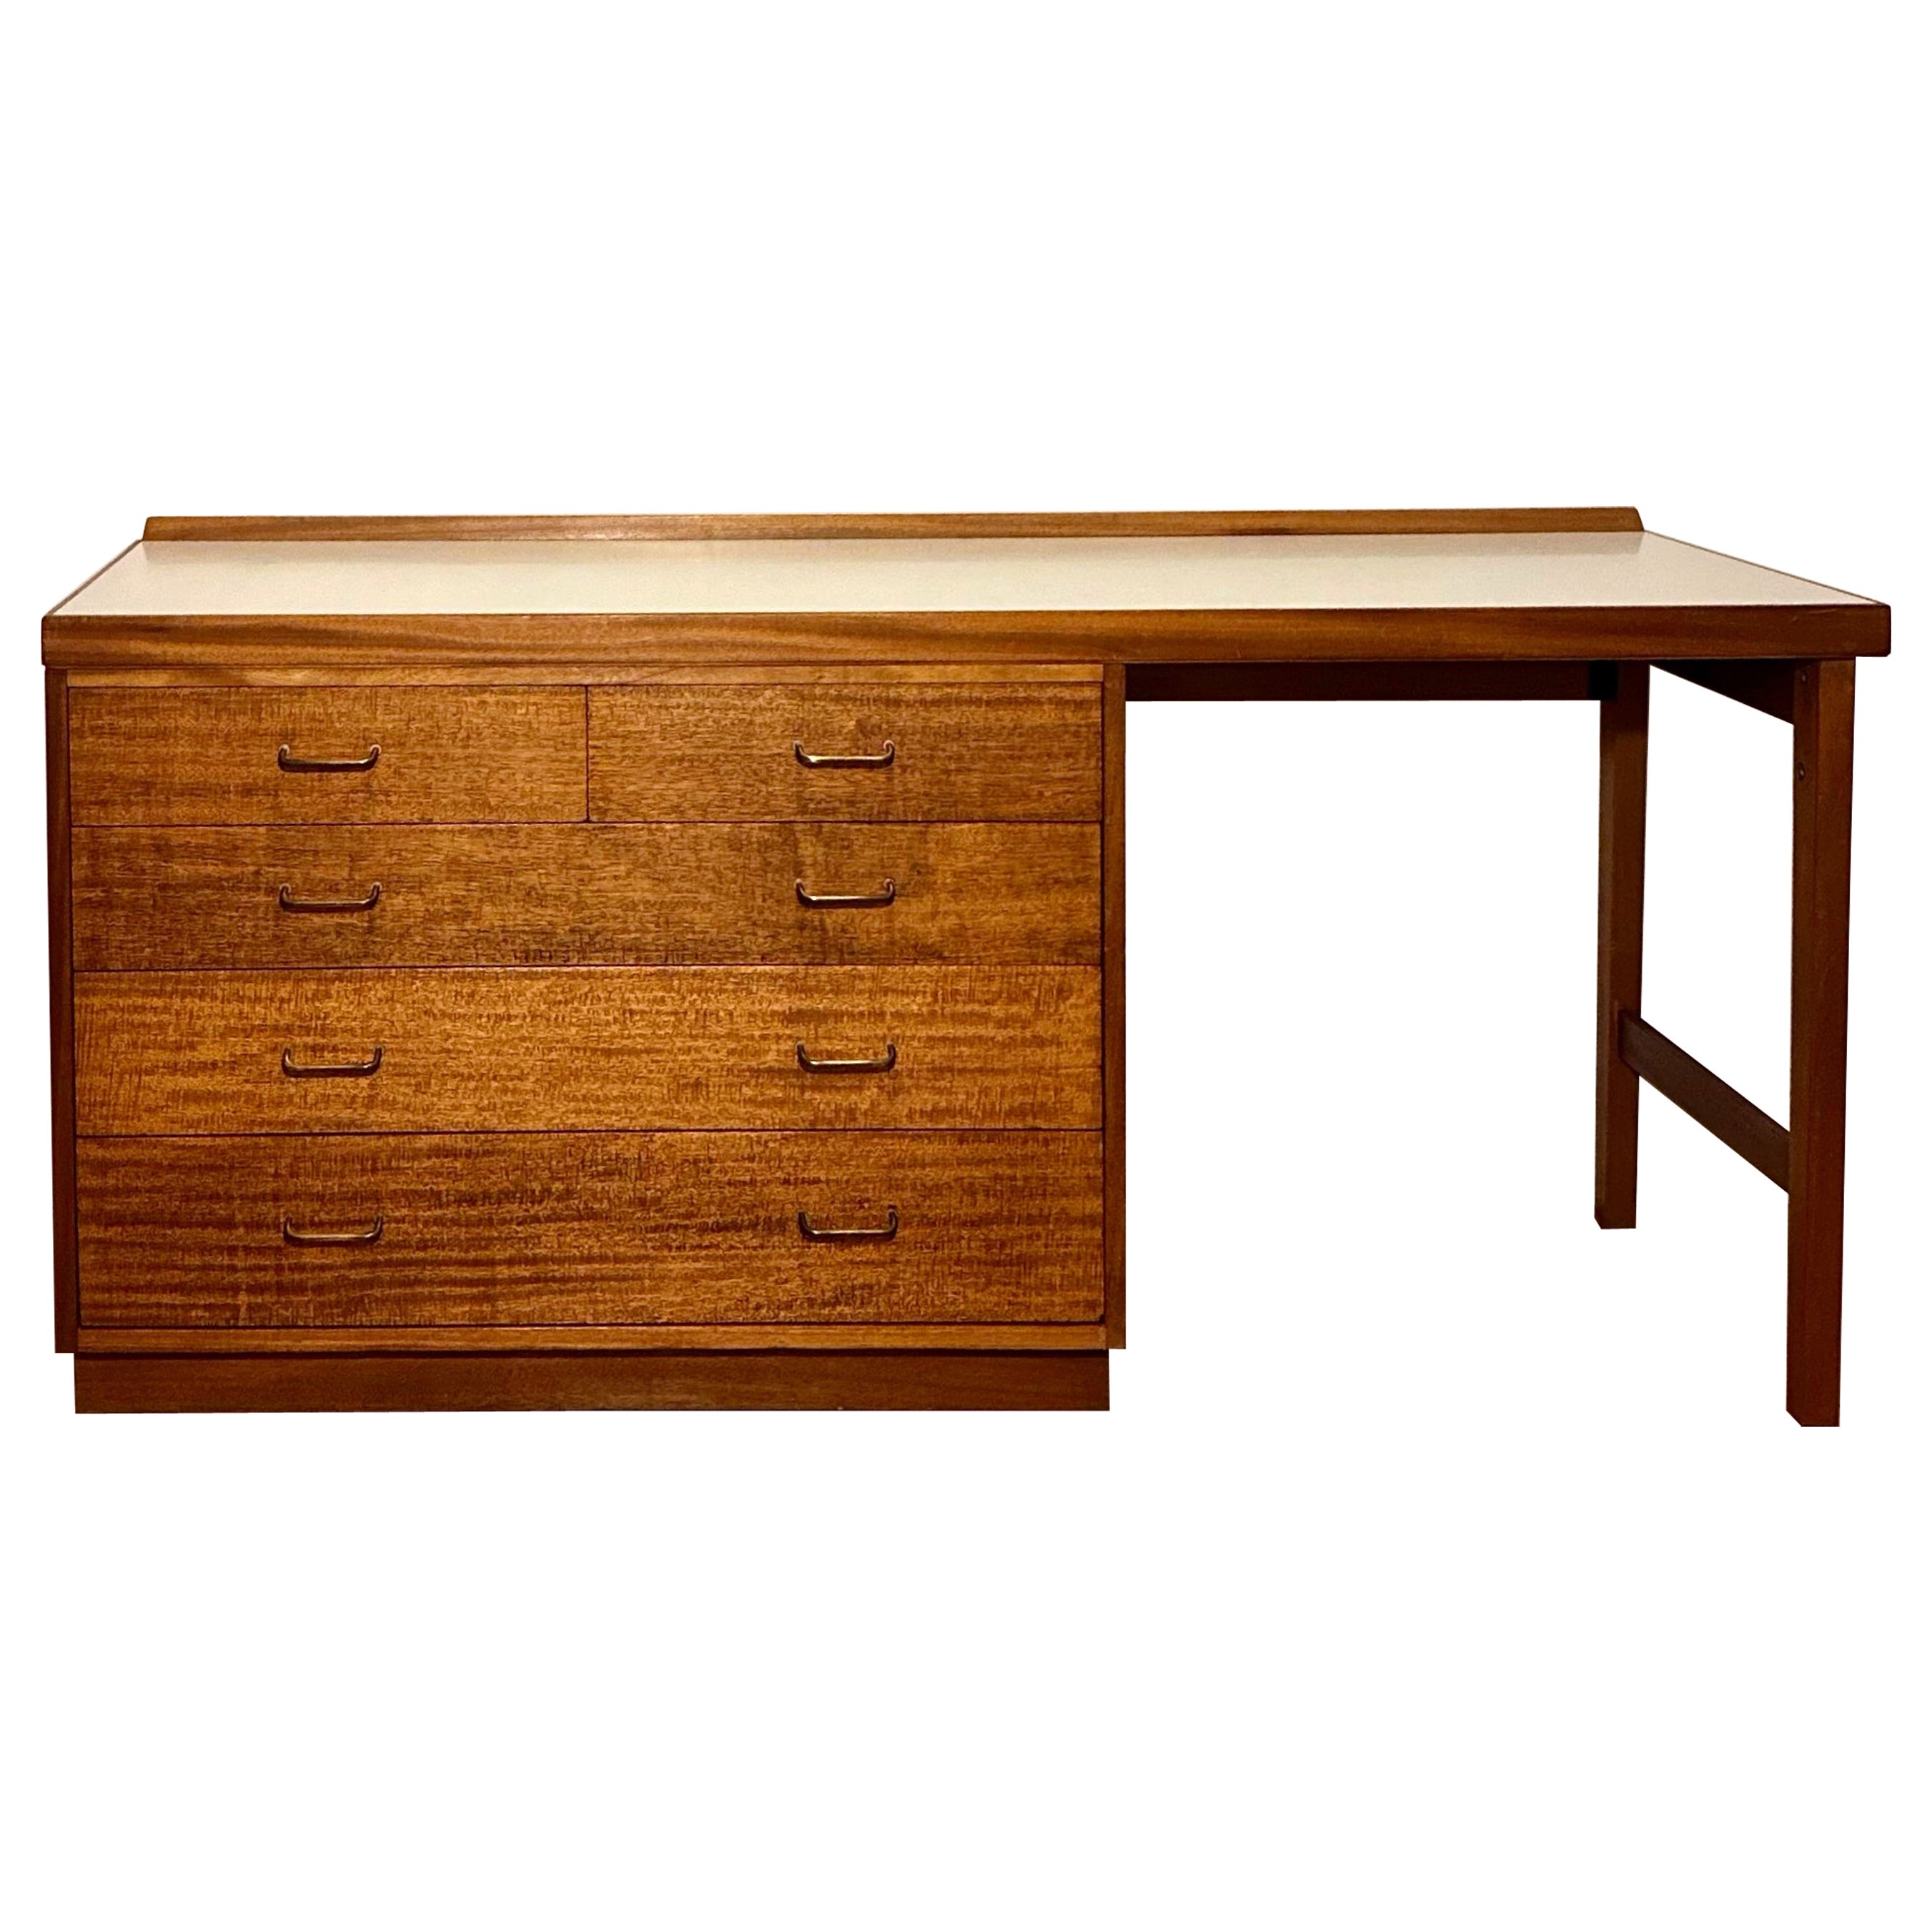 Very Rare Mid-Century Vintage Retro Teak Desk by Remploy